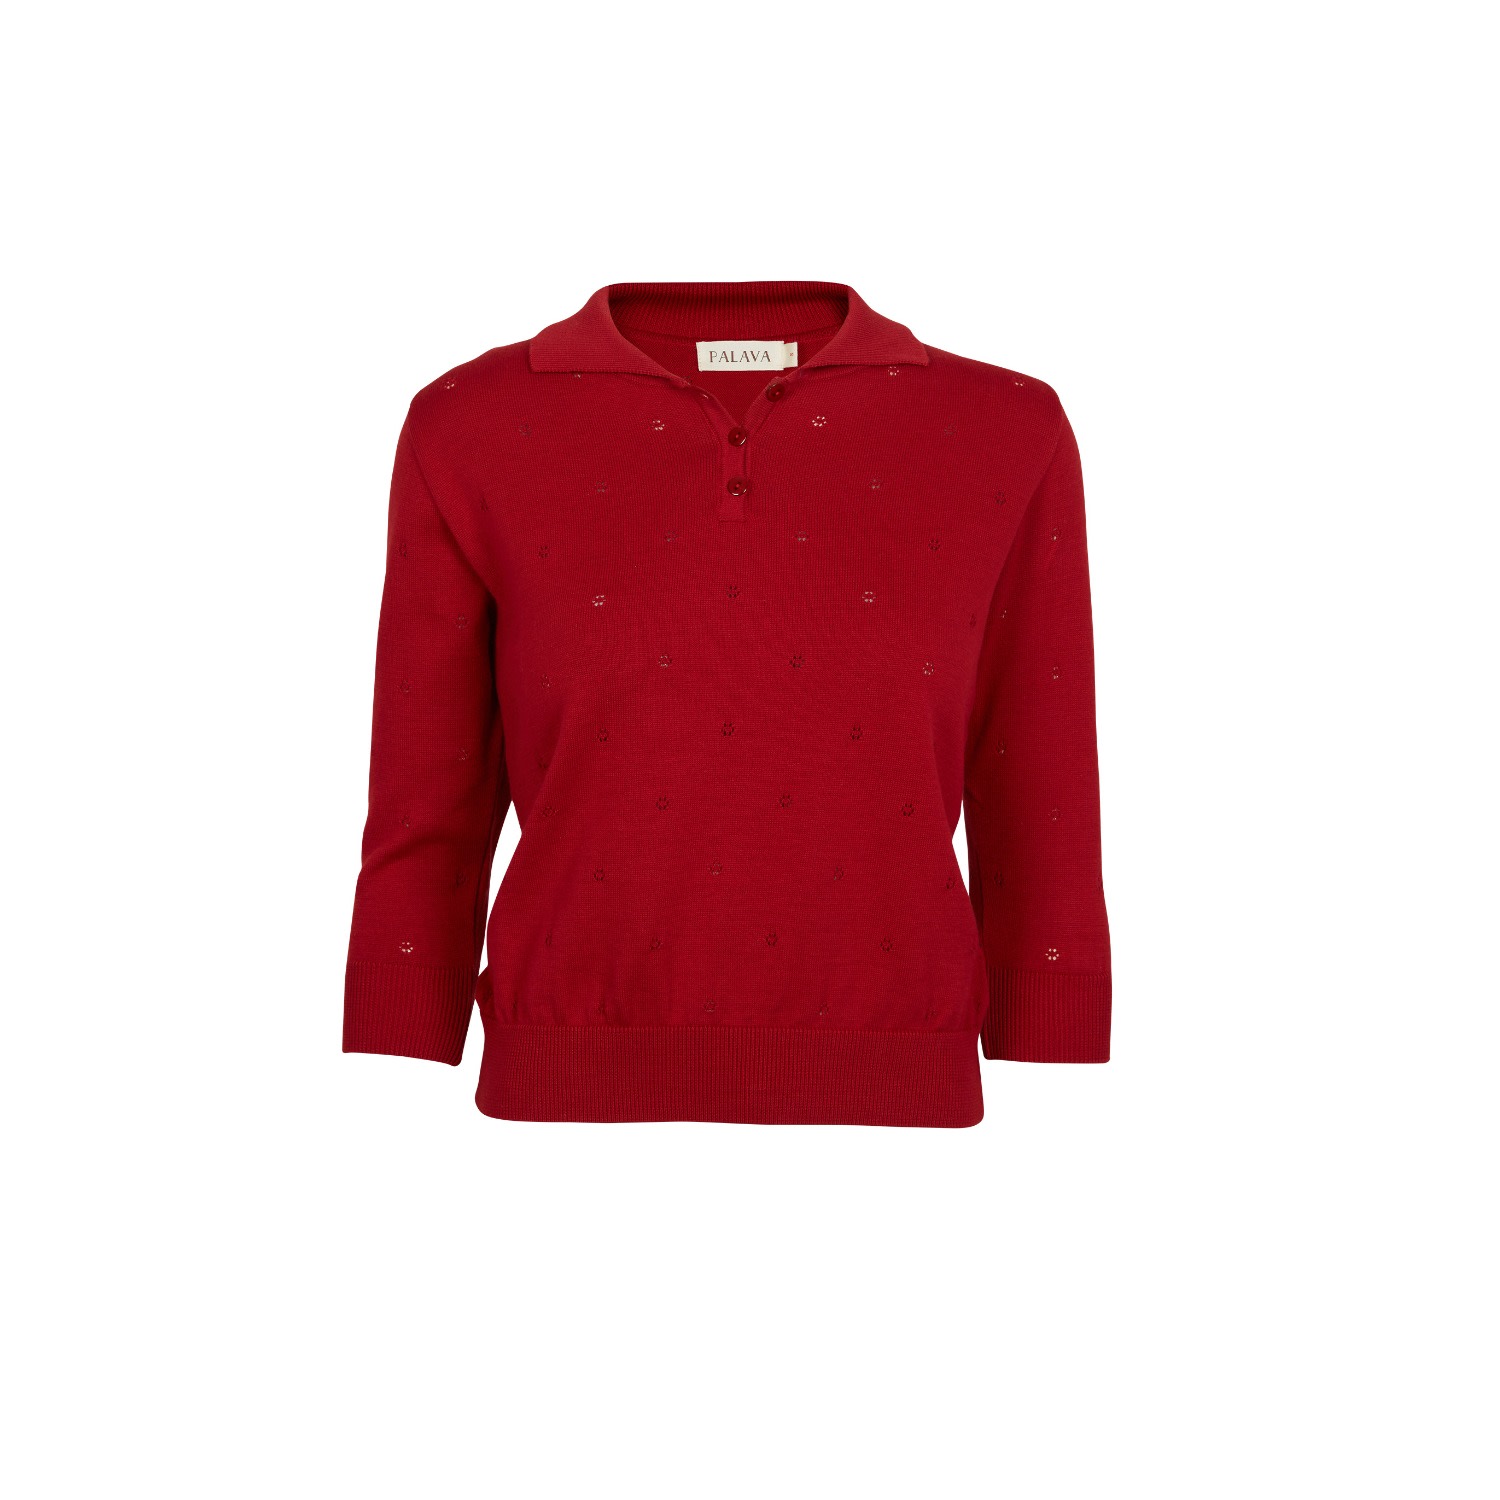 Palava Women's Aila - Crimson Red - Knitted Top